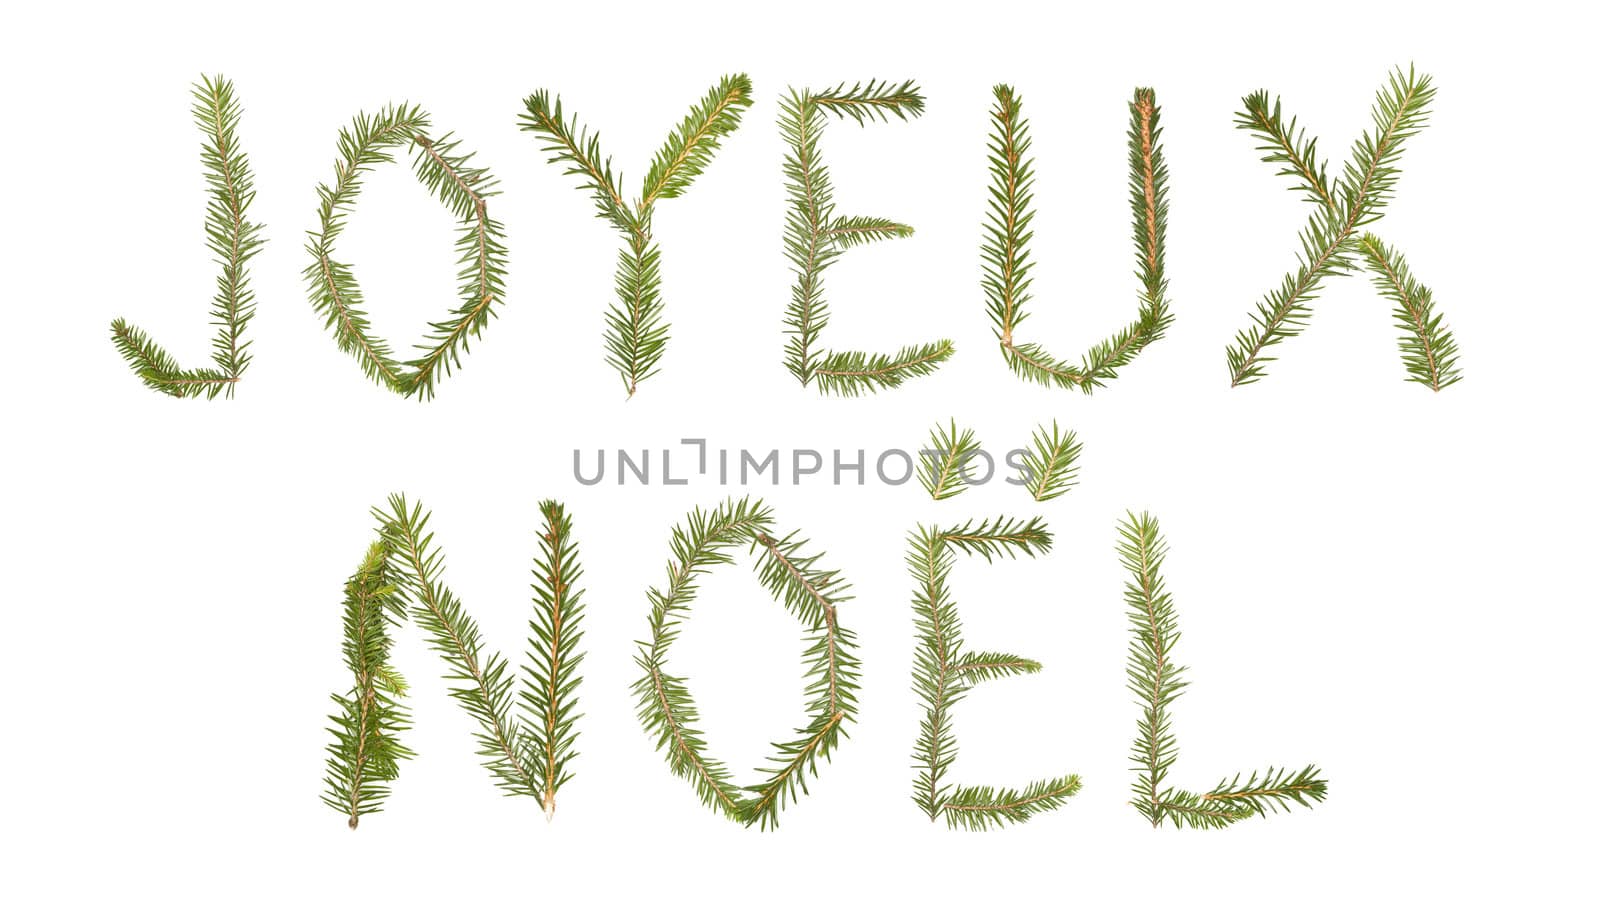 Spruce twigs forming the phrase 'Joyeux Noel'' isolated on white